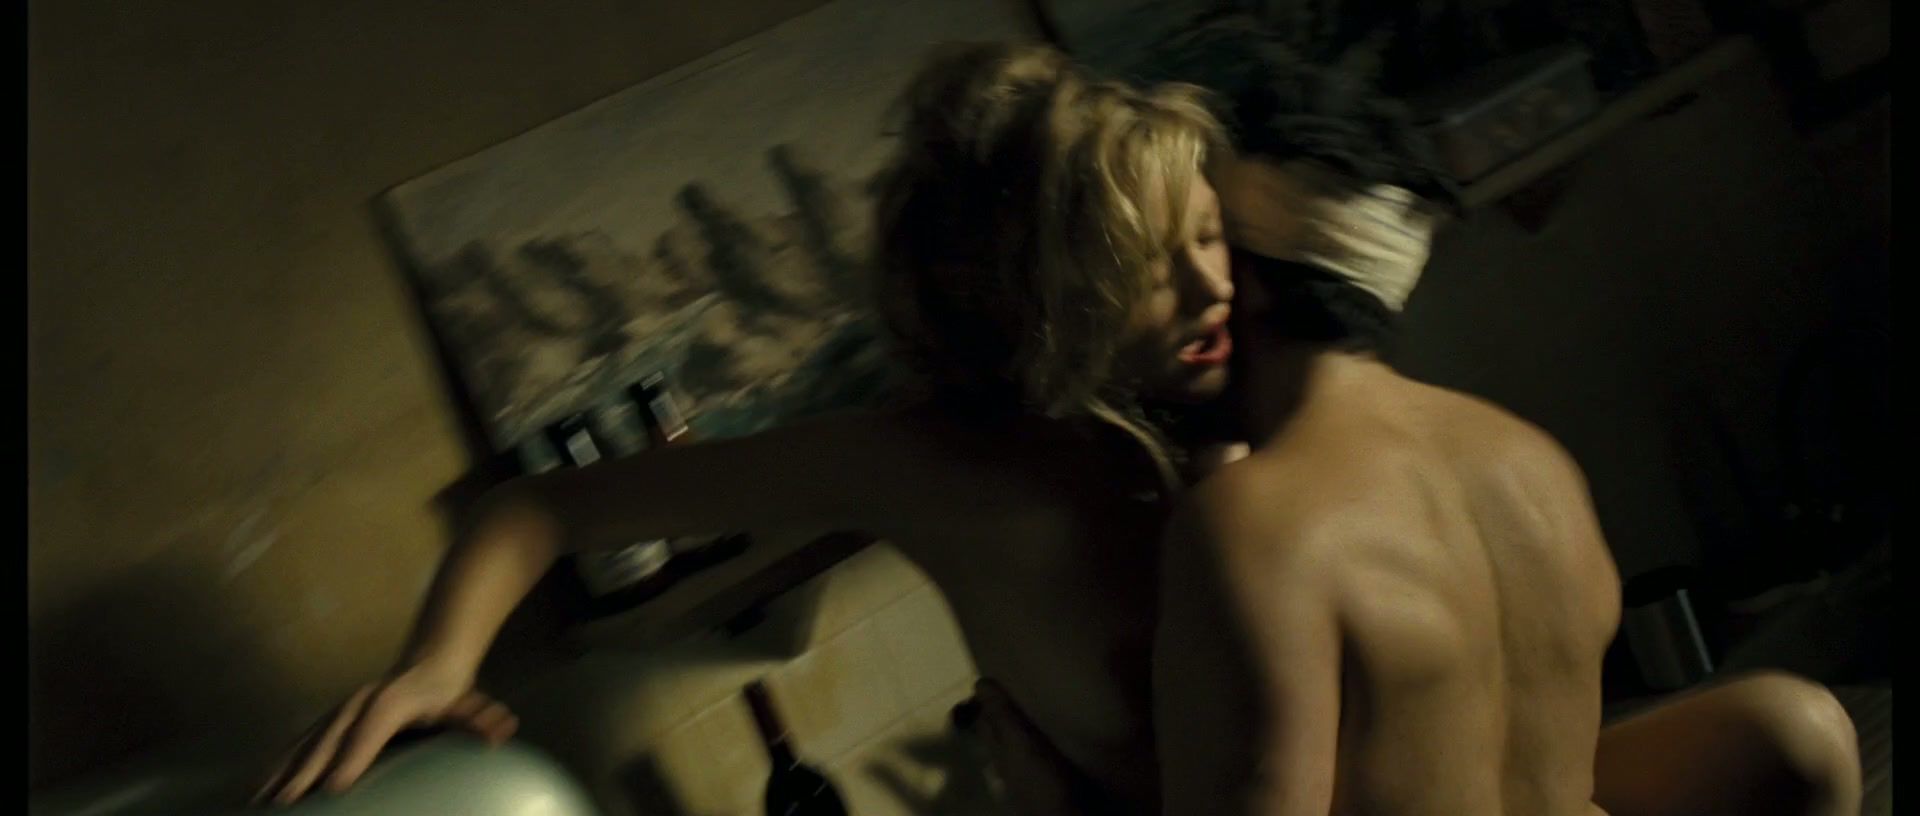 Screaming Naked Marion Cotillard - La boite noire (2005) Facials